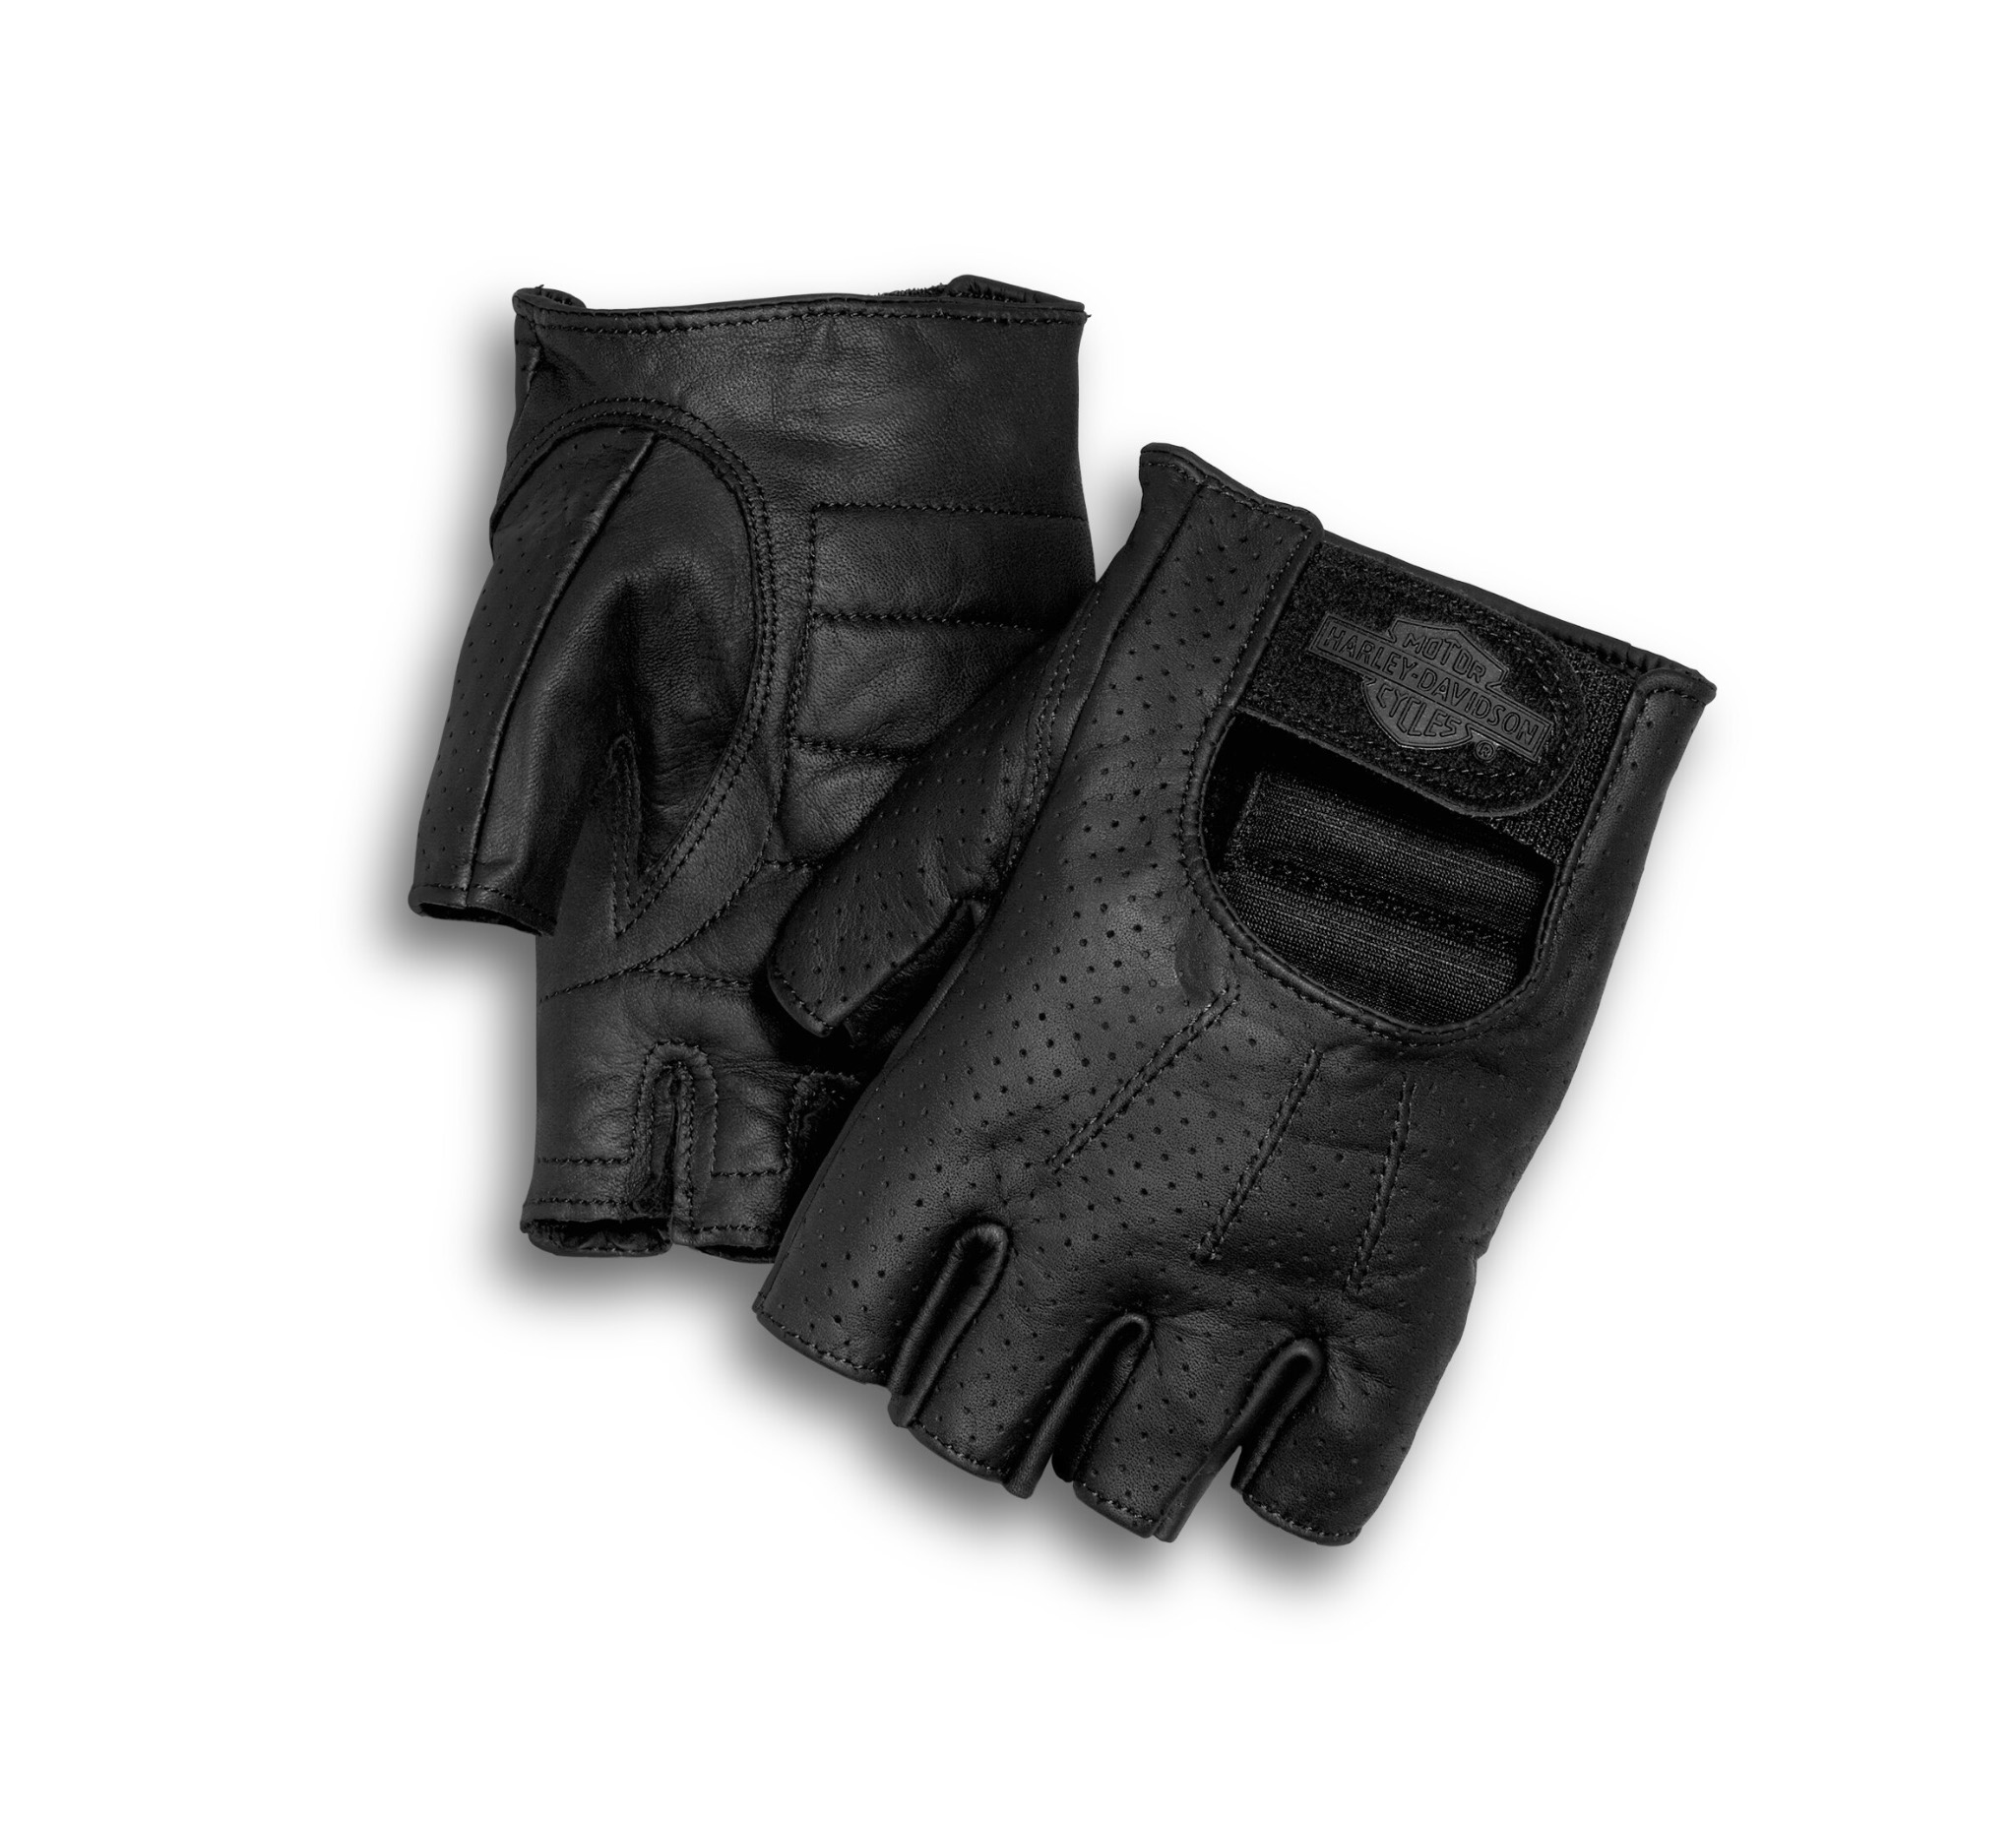 Men's Operative Riding Shirt Jacket - Black | Harley-Davidson CA